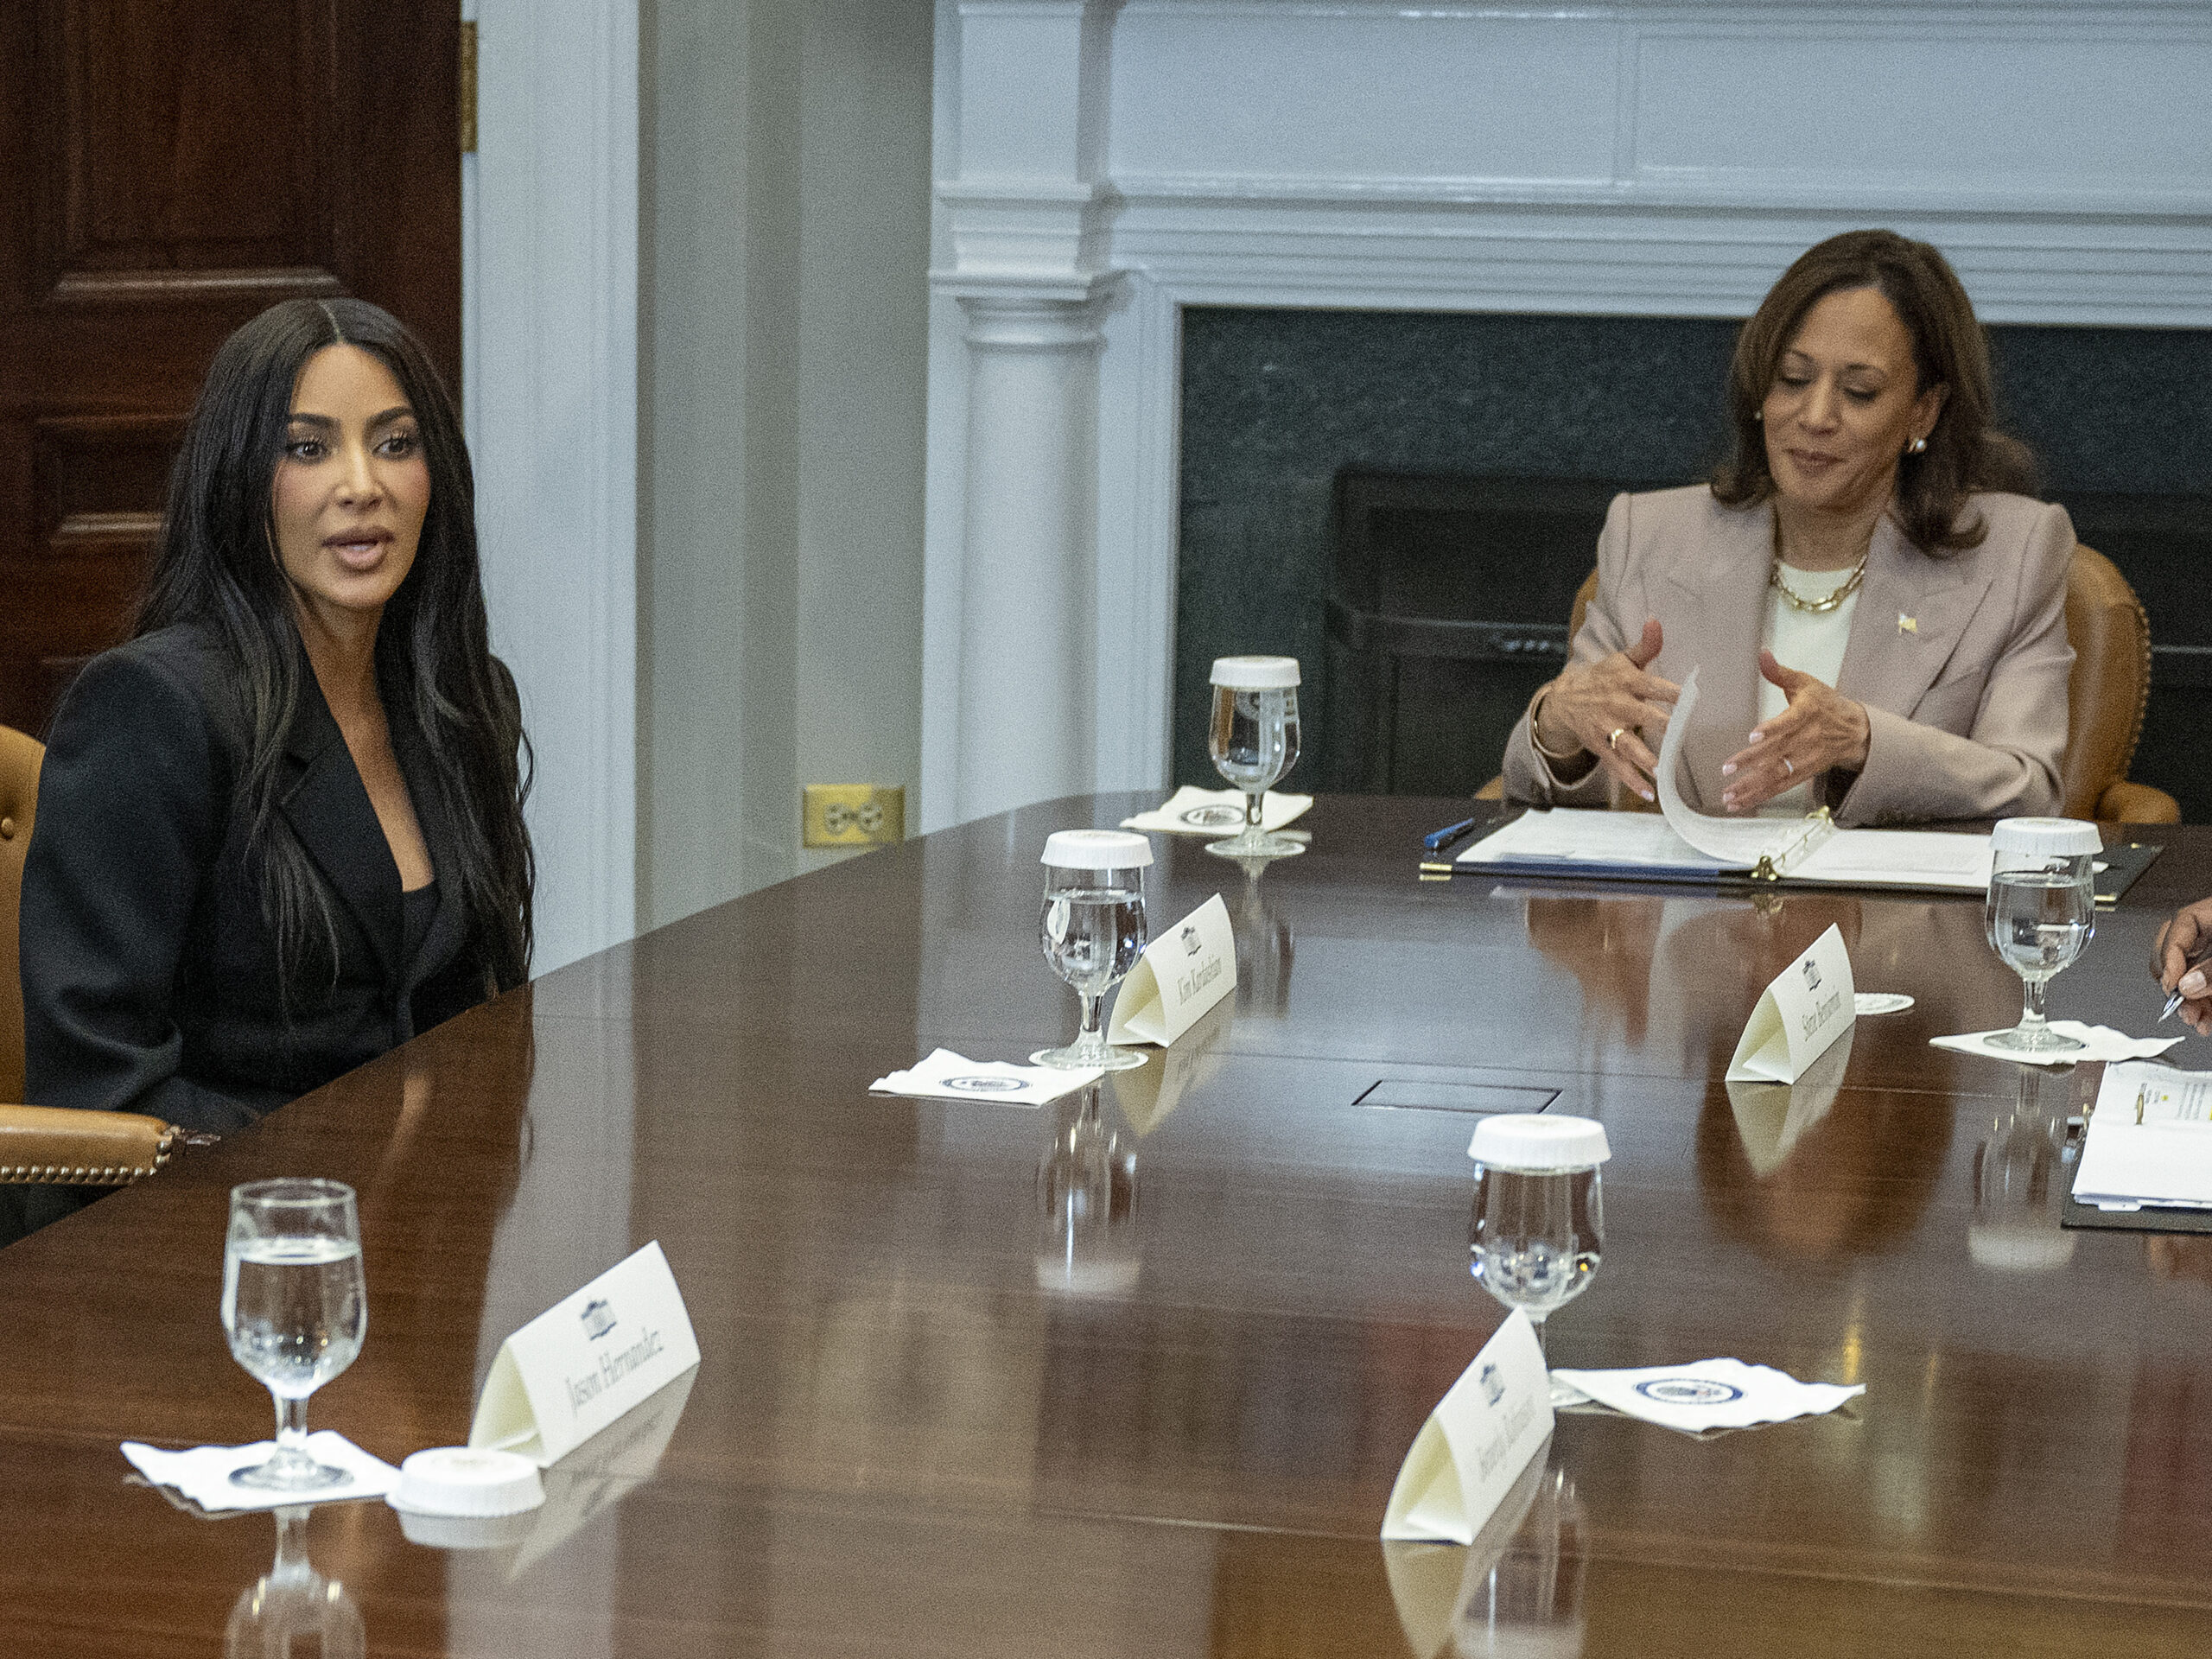 Kim Kardashian met with Vice President Kamala Harris to discuss criminal justice reform.